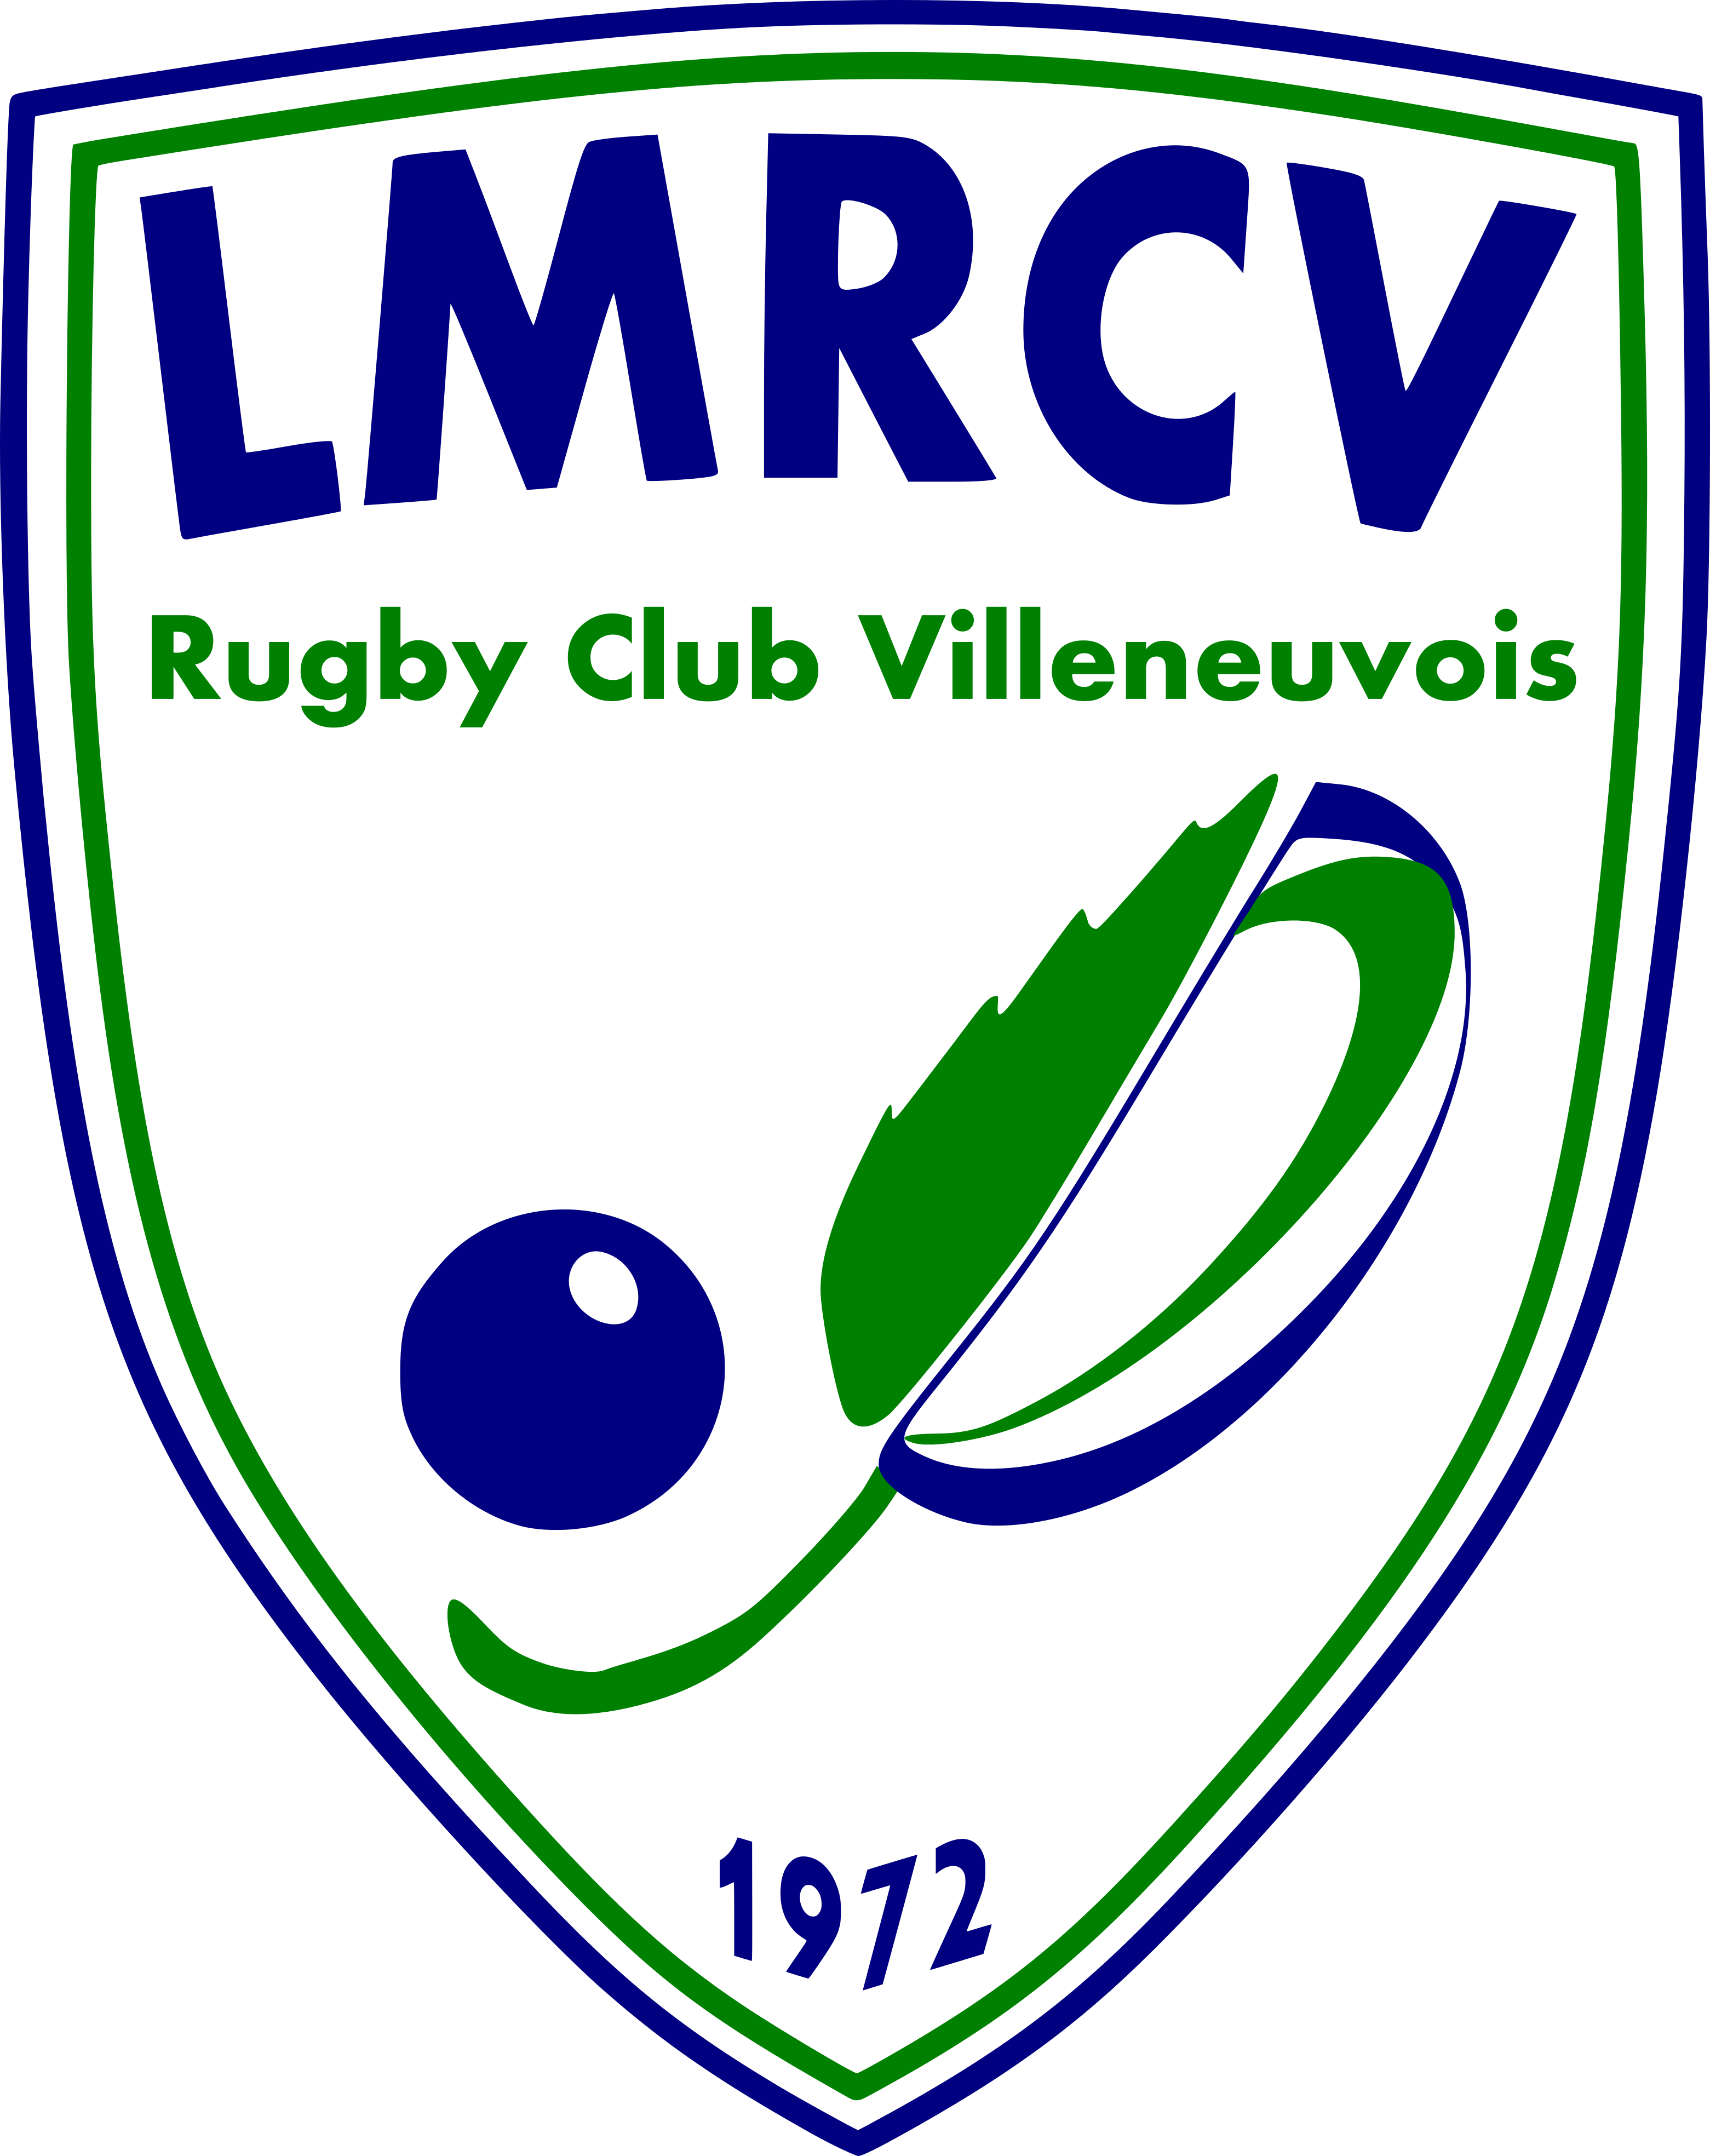 lmrcv-logo-620a845add7df852009486.png